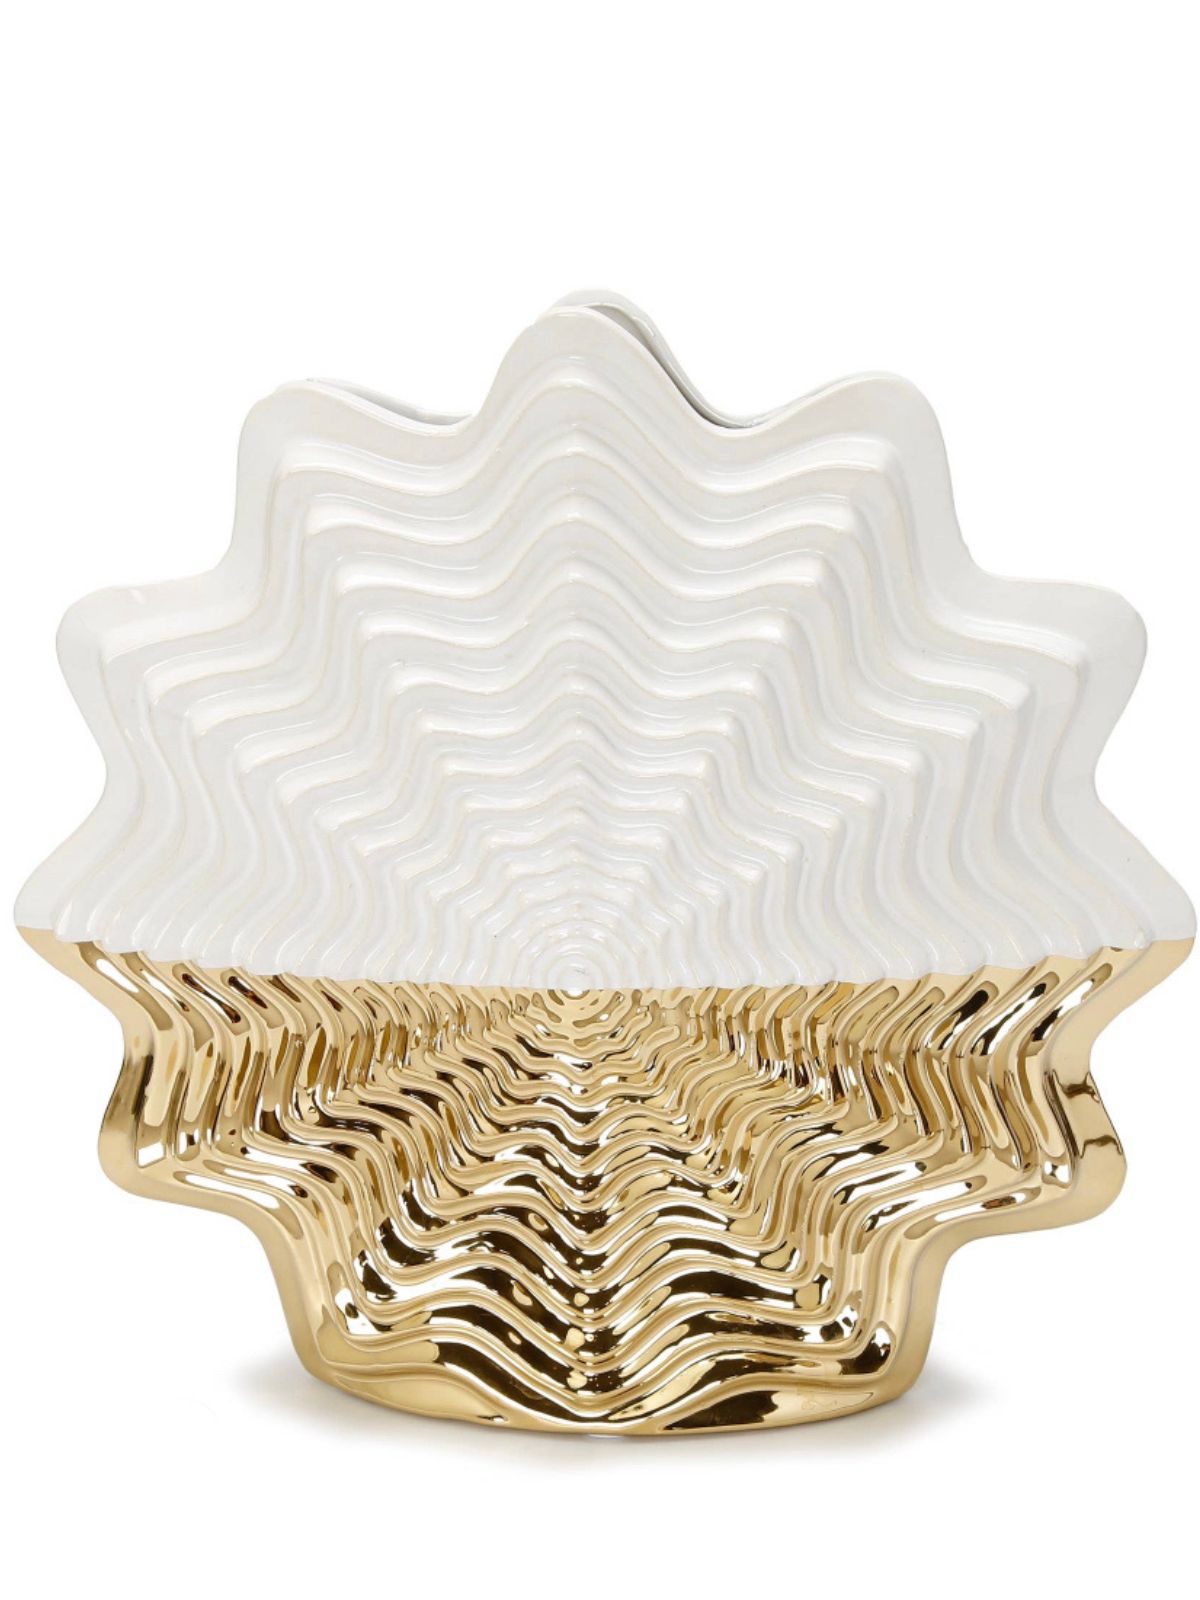 11H Luxurious White and Gold Star Designed Porcelain Vase - KYA Home Decor